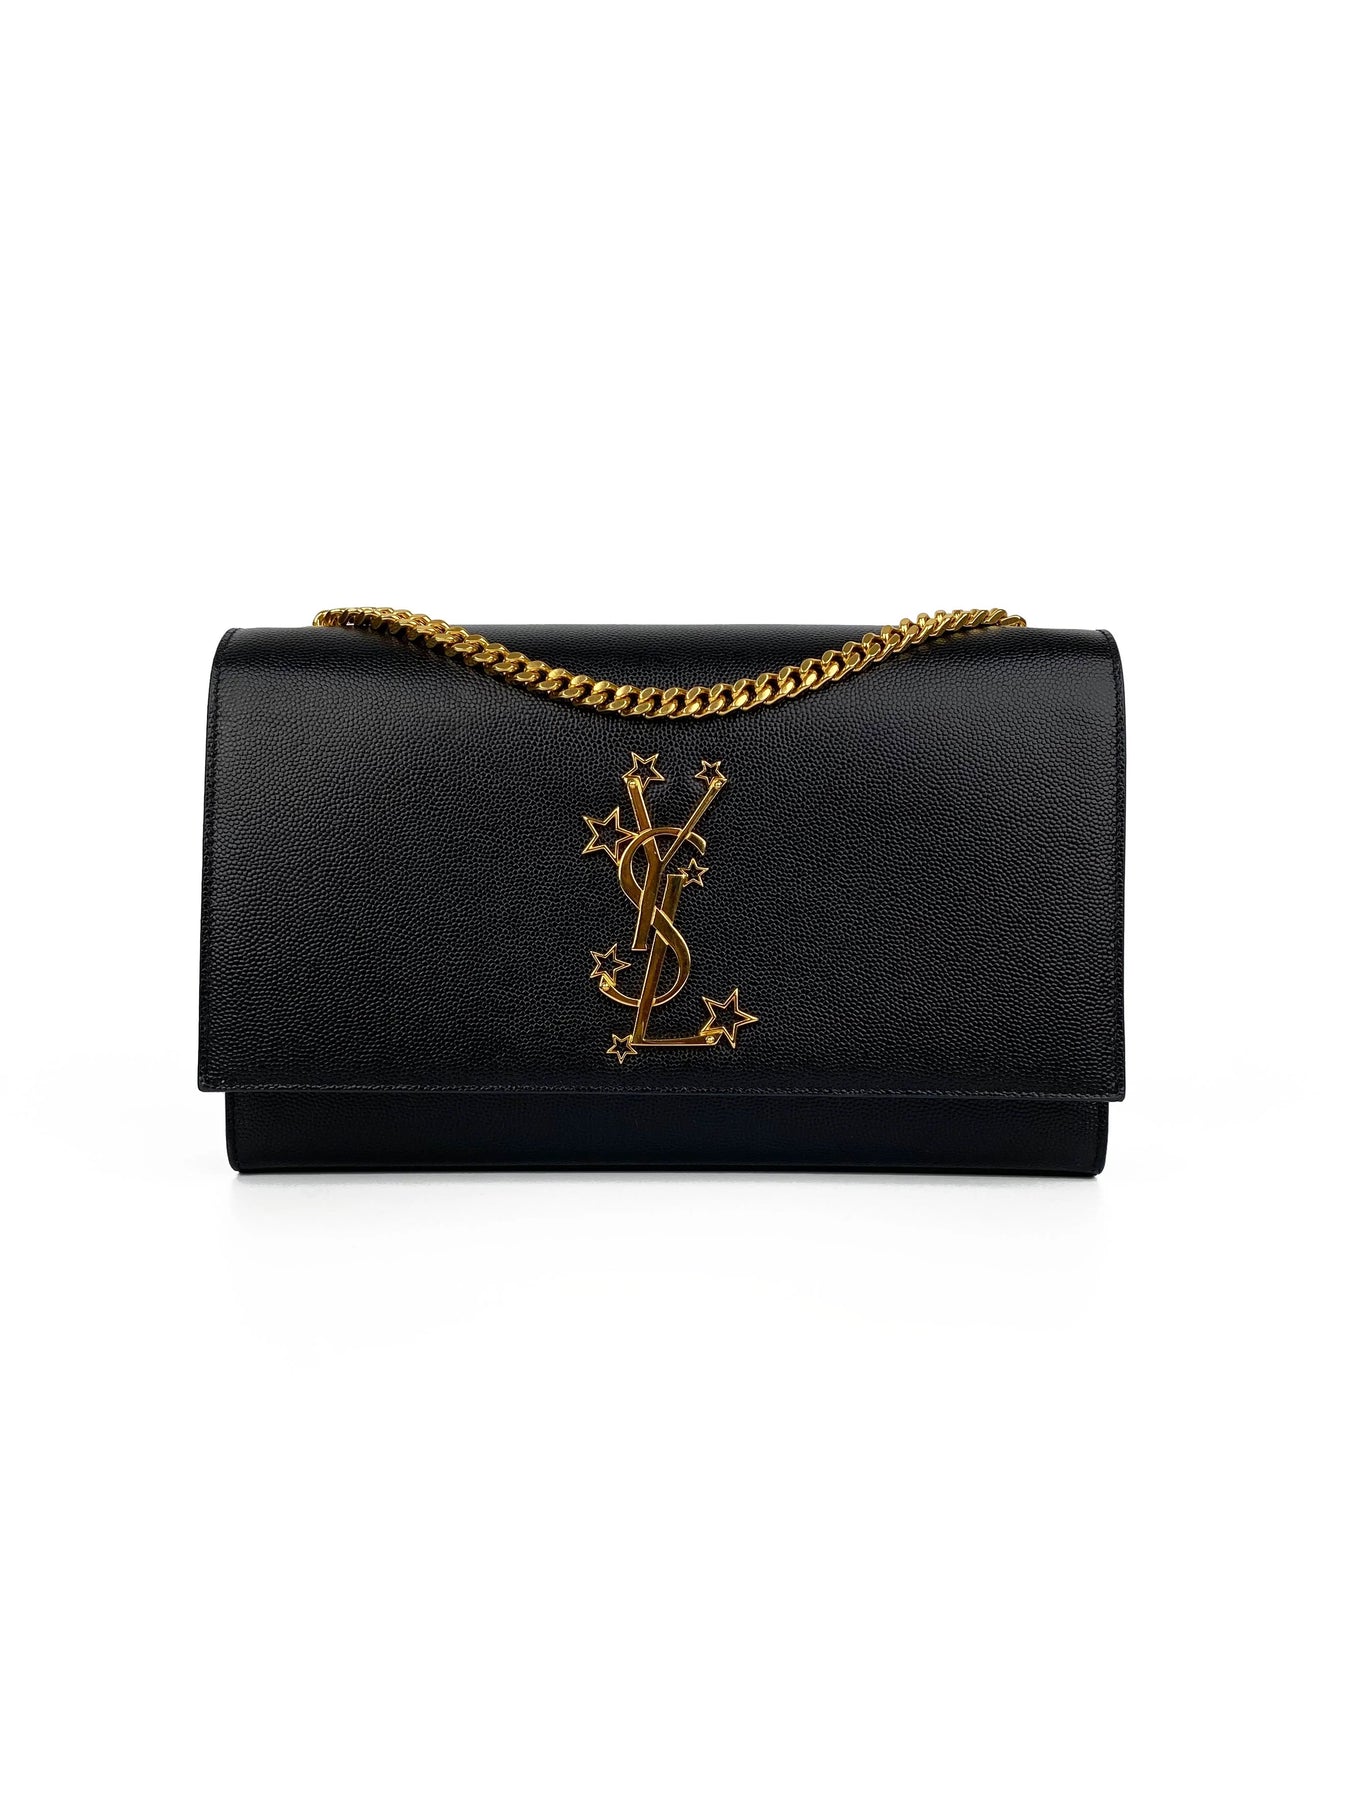 Saint Laurent - Authenticated Kate Monogramme Clutch Bag - Leather Black Plain For Woman, Very Good condition